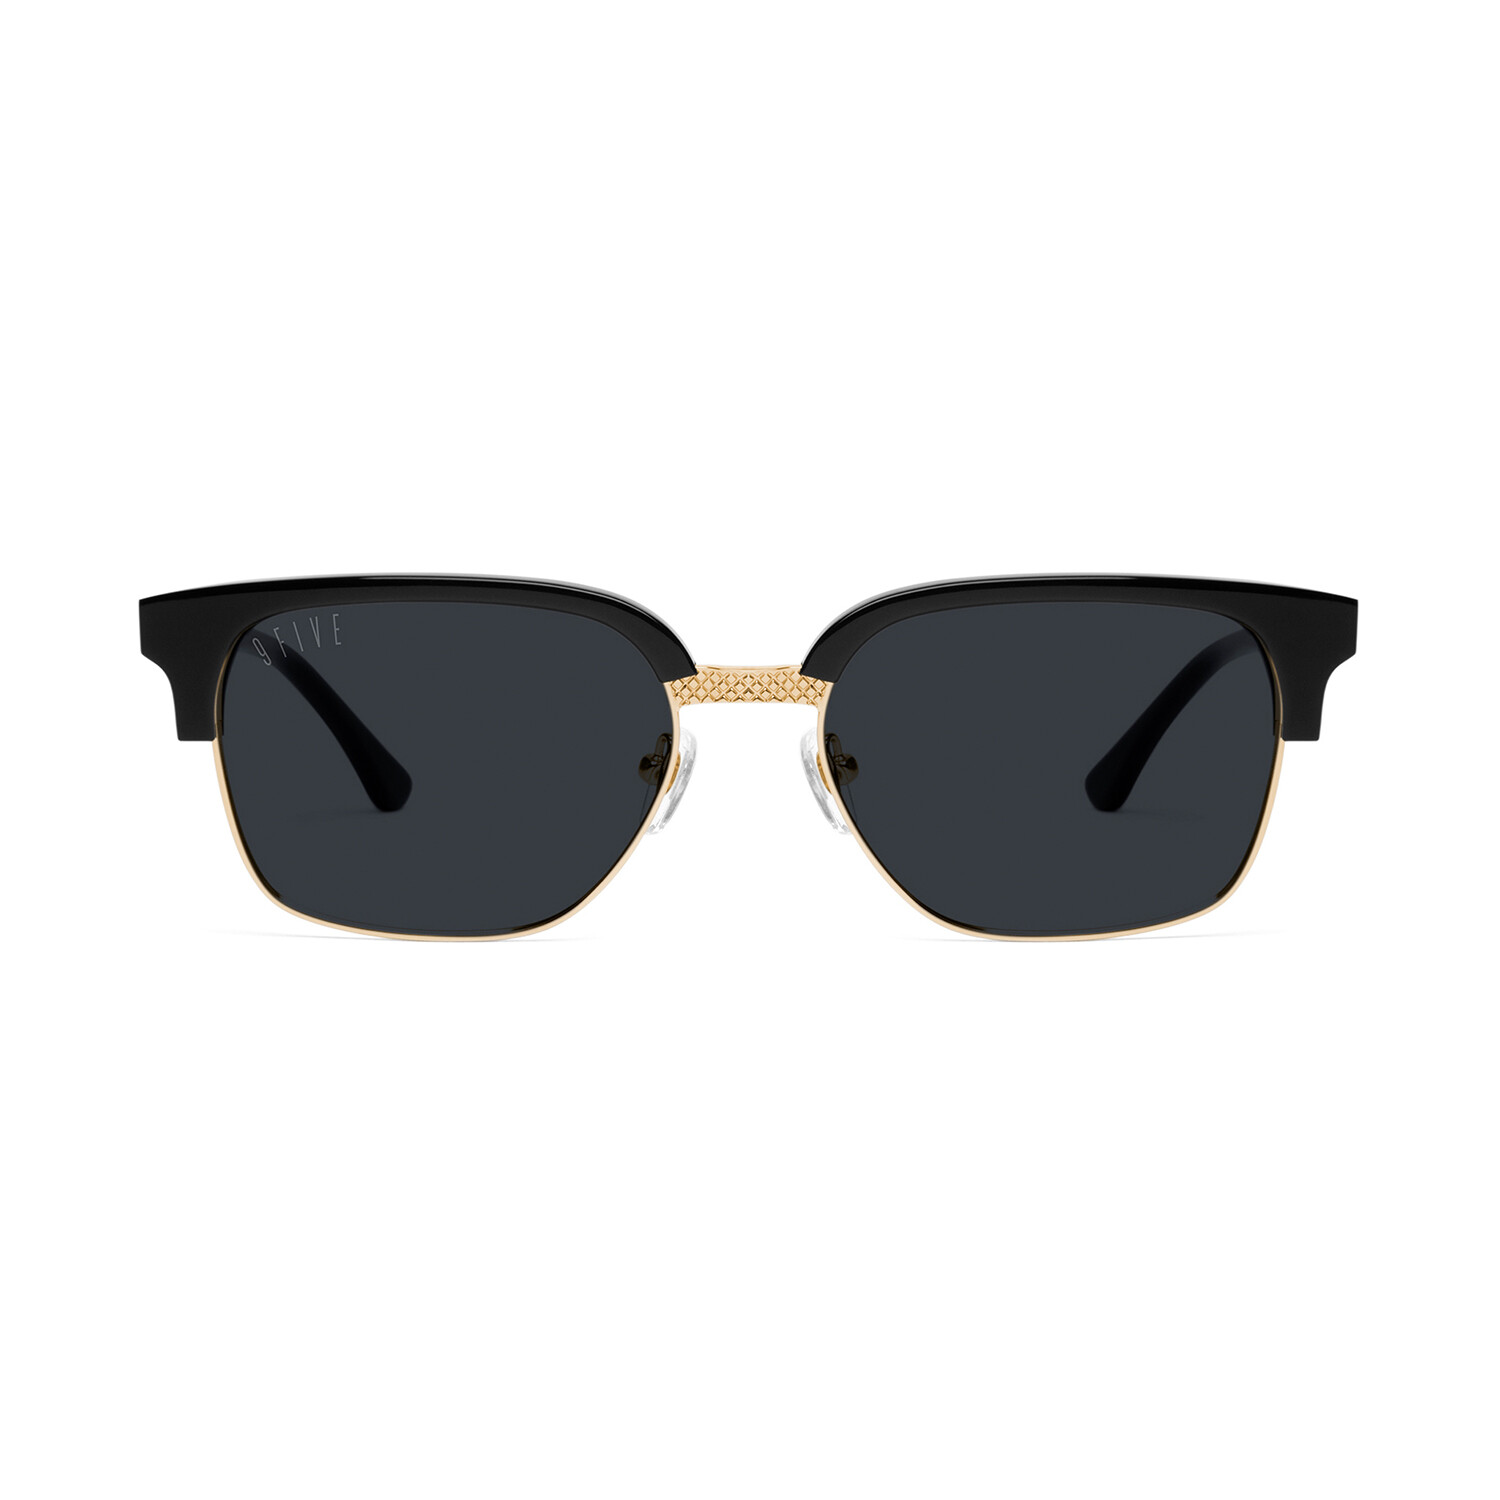 Unisex Estate Sunglasses Black Gold 9five Sunglasses Touch Of 